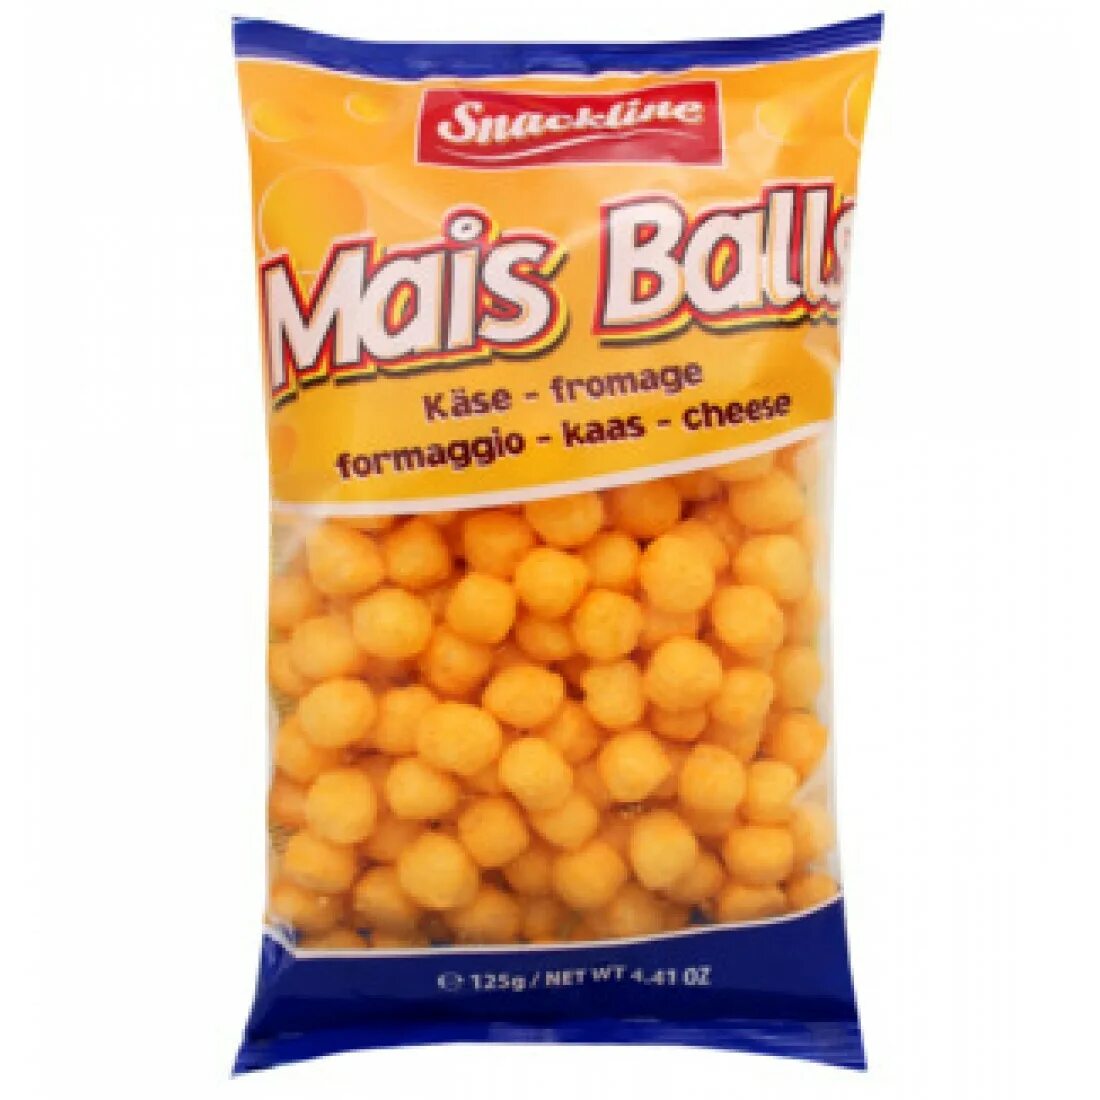 Кукурузные шарики сыр ball. Кукурузные снэки Chees Ball. Сыр Ball кукурузные шарики. Сырные шарики Корн бол. Сырные шарики чипсы.